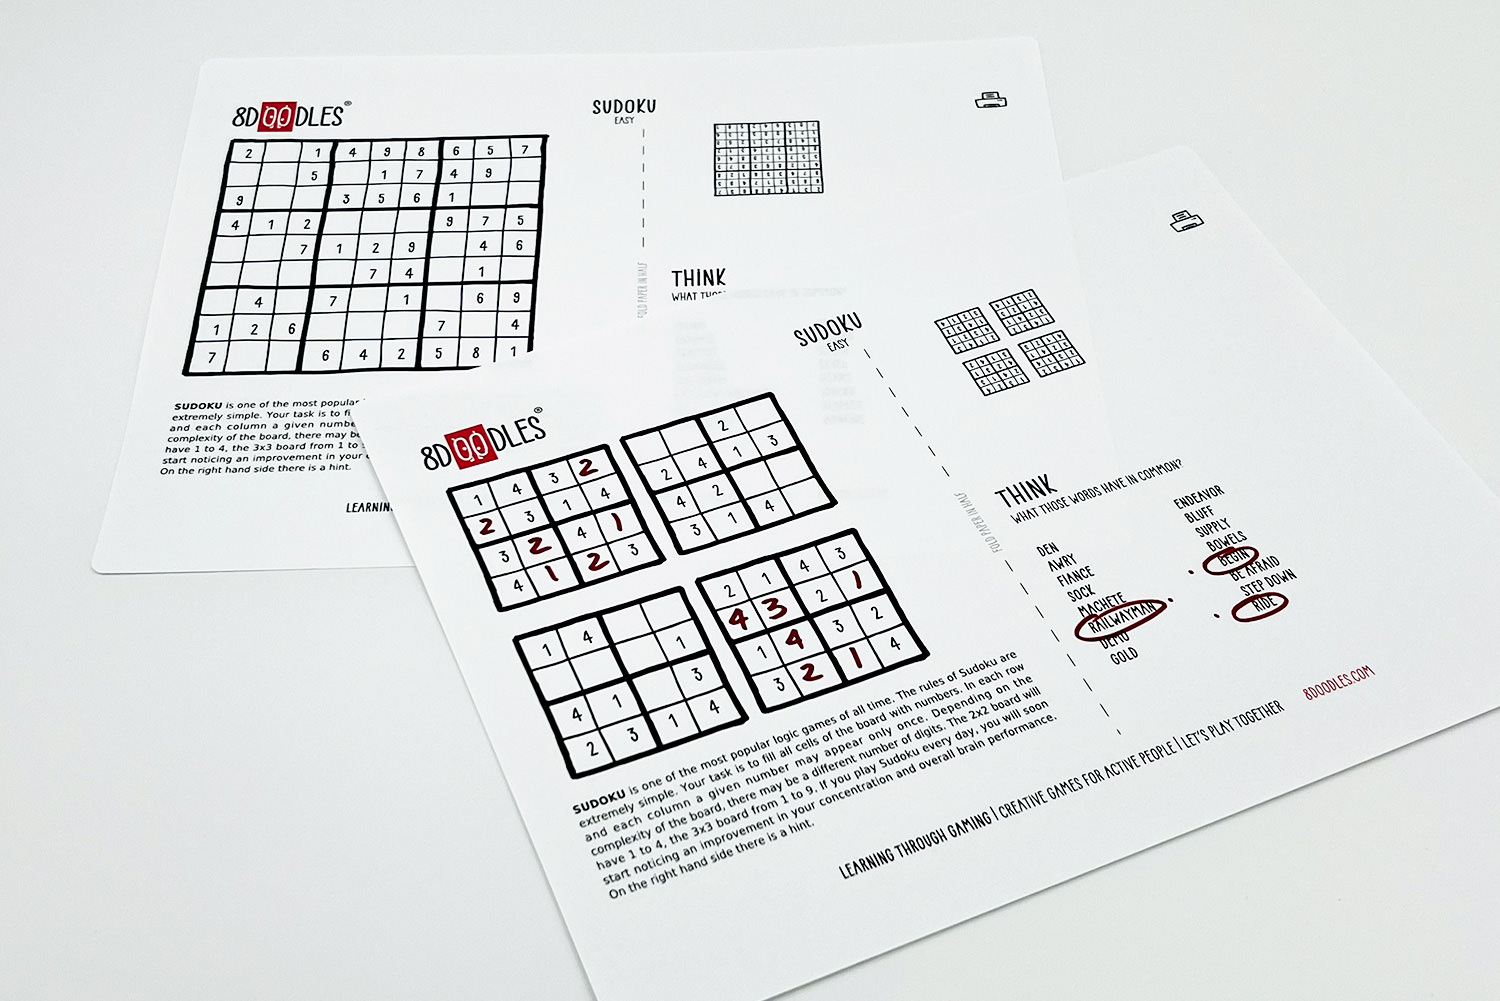 info-box-sudoku-puzzle-i-gry-logiczne